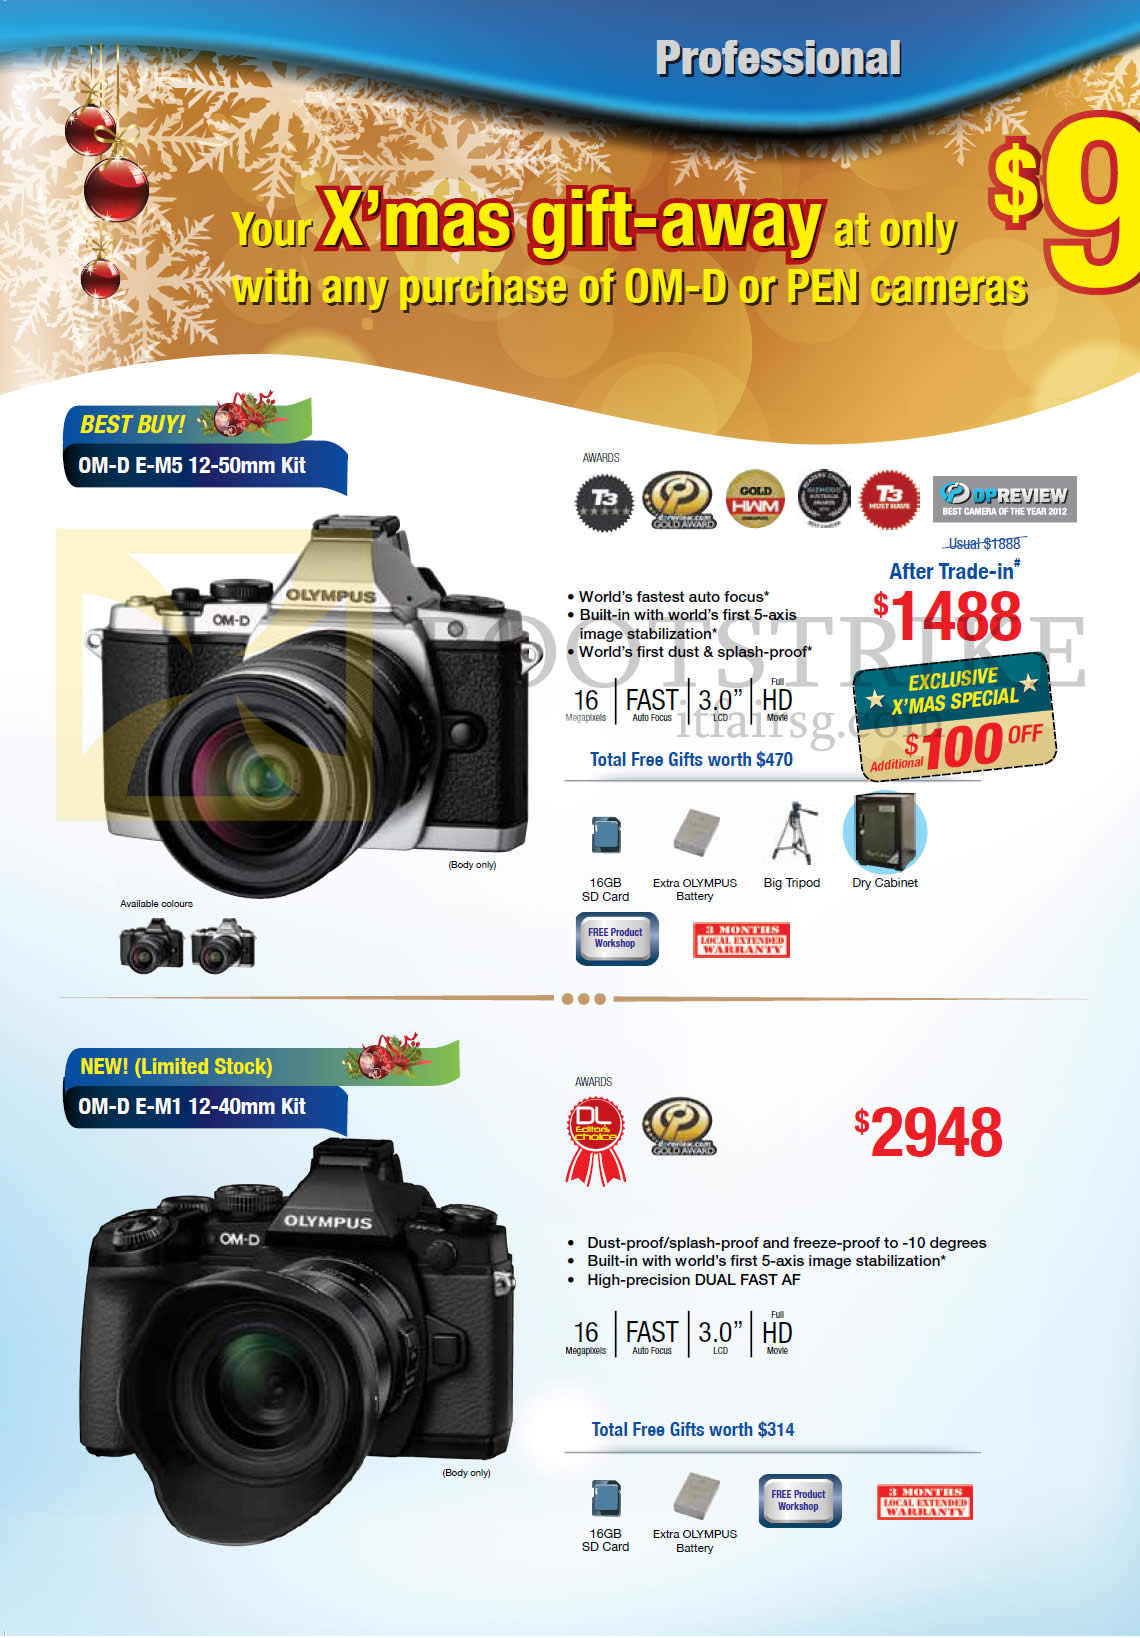 SITEX 2013 price list image brochure of Olympus Digital Cameras OM-D E-M5, OM-D E-M1